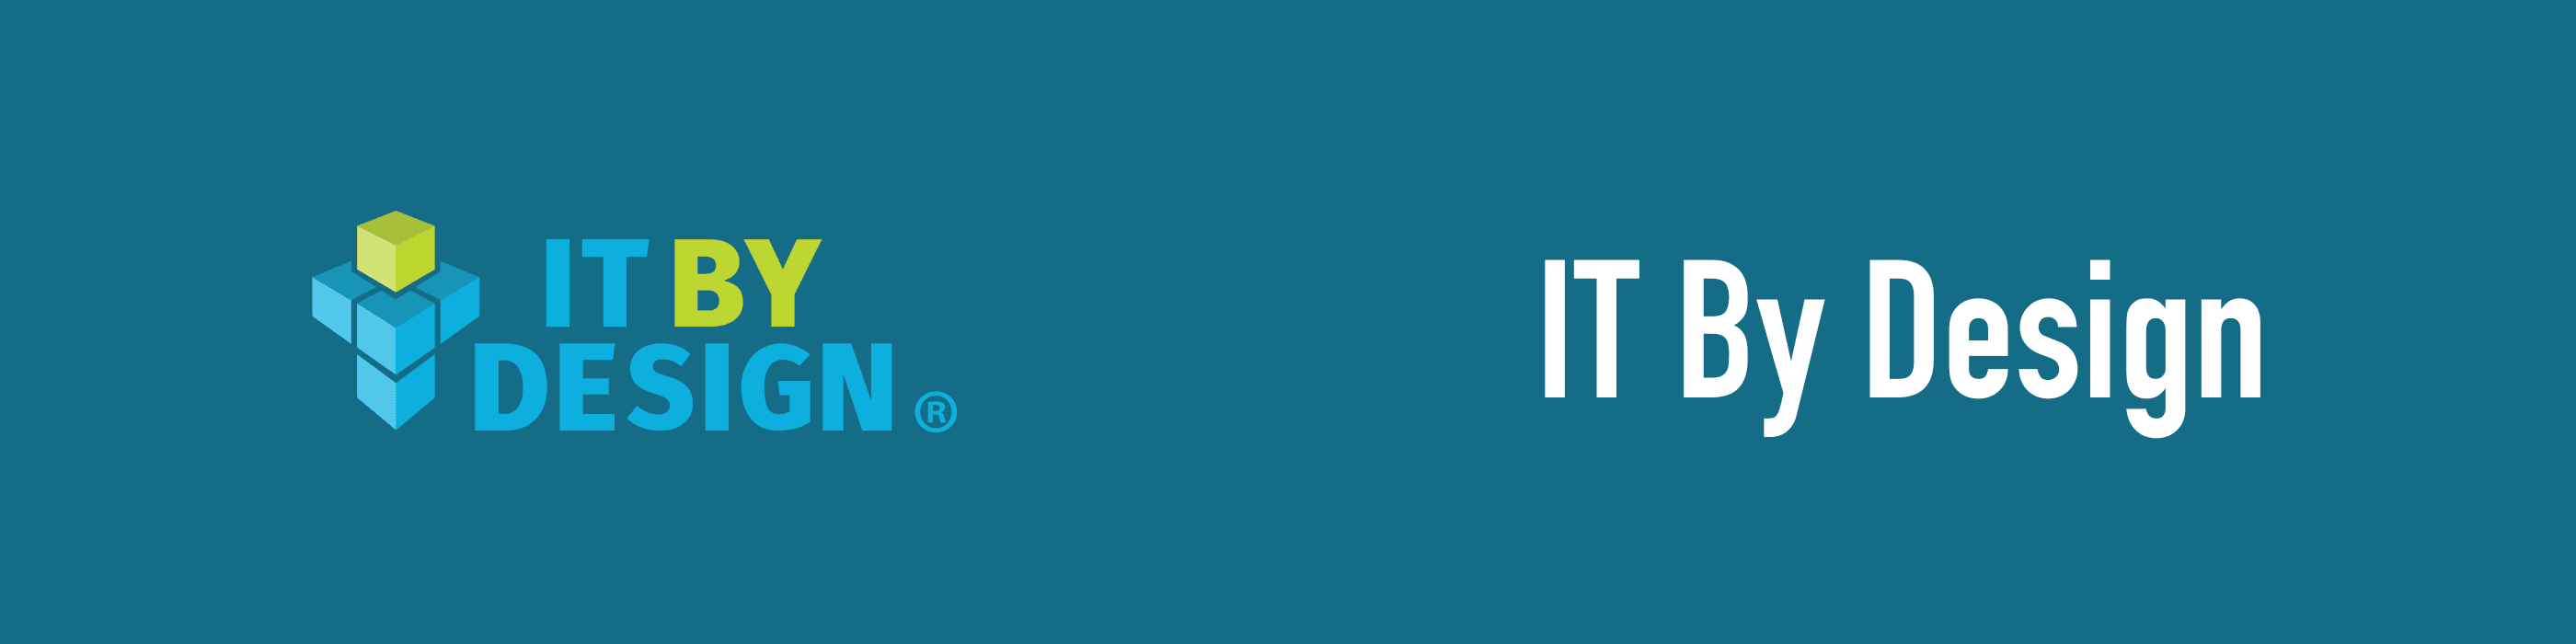 ITbyDesign banner